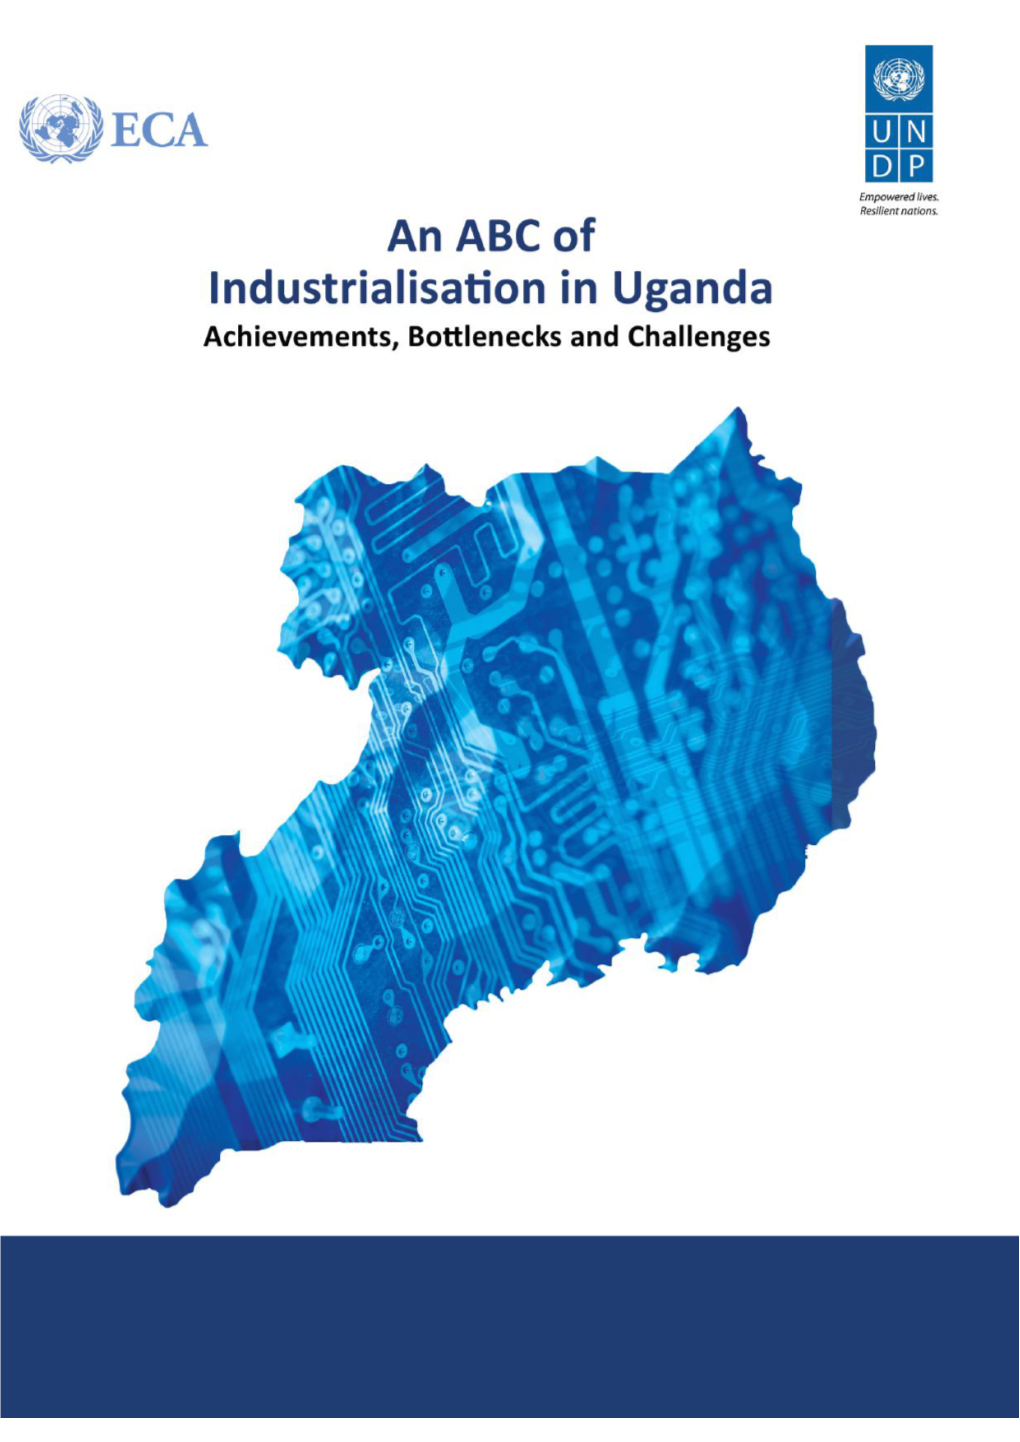 An ABC of Industrialisation in Uganda: Achievements, Bottlenecks and Challenges